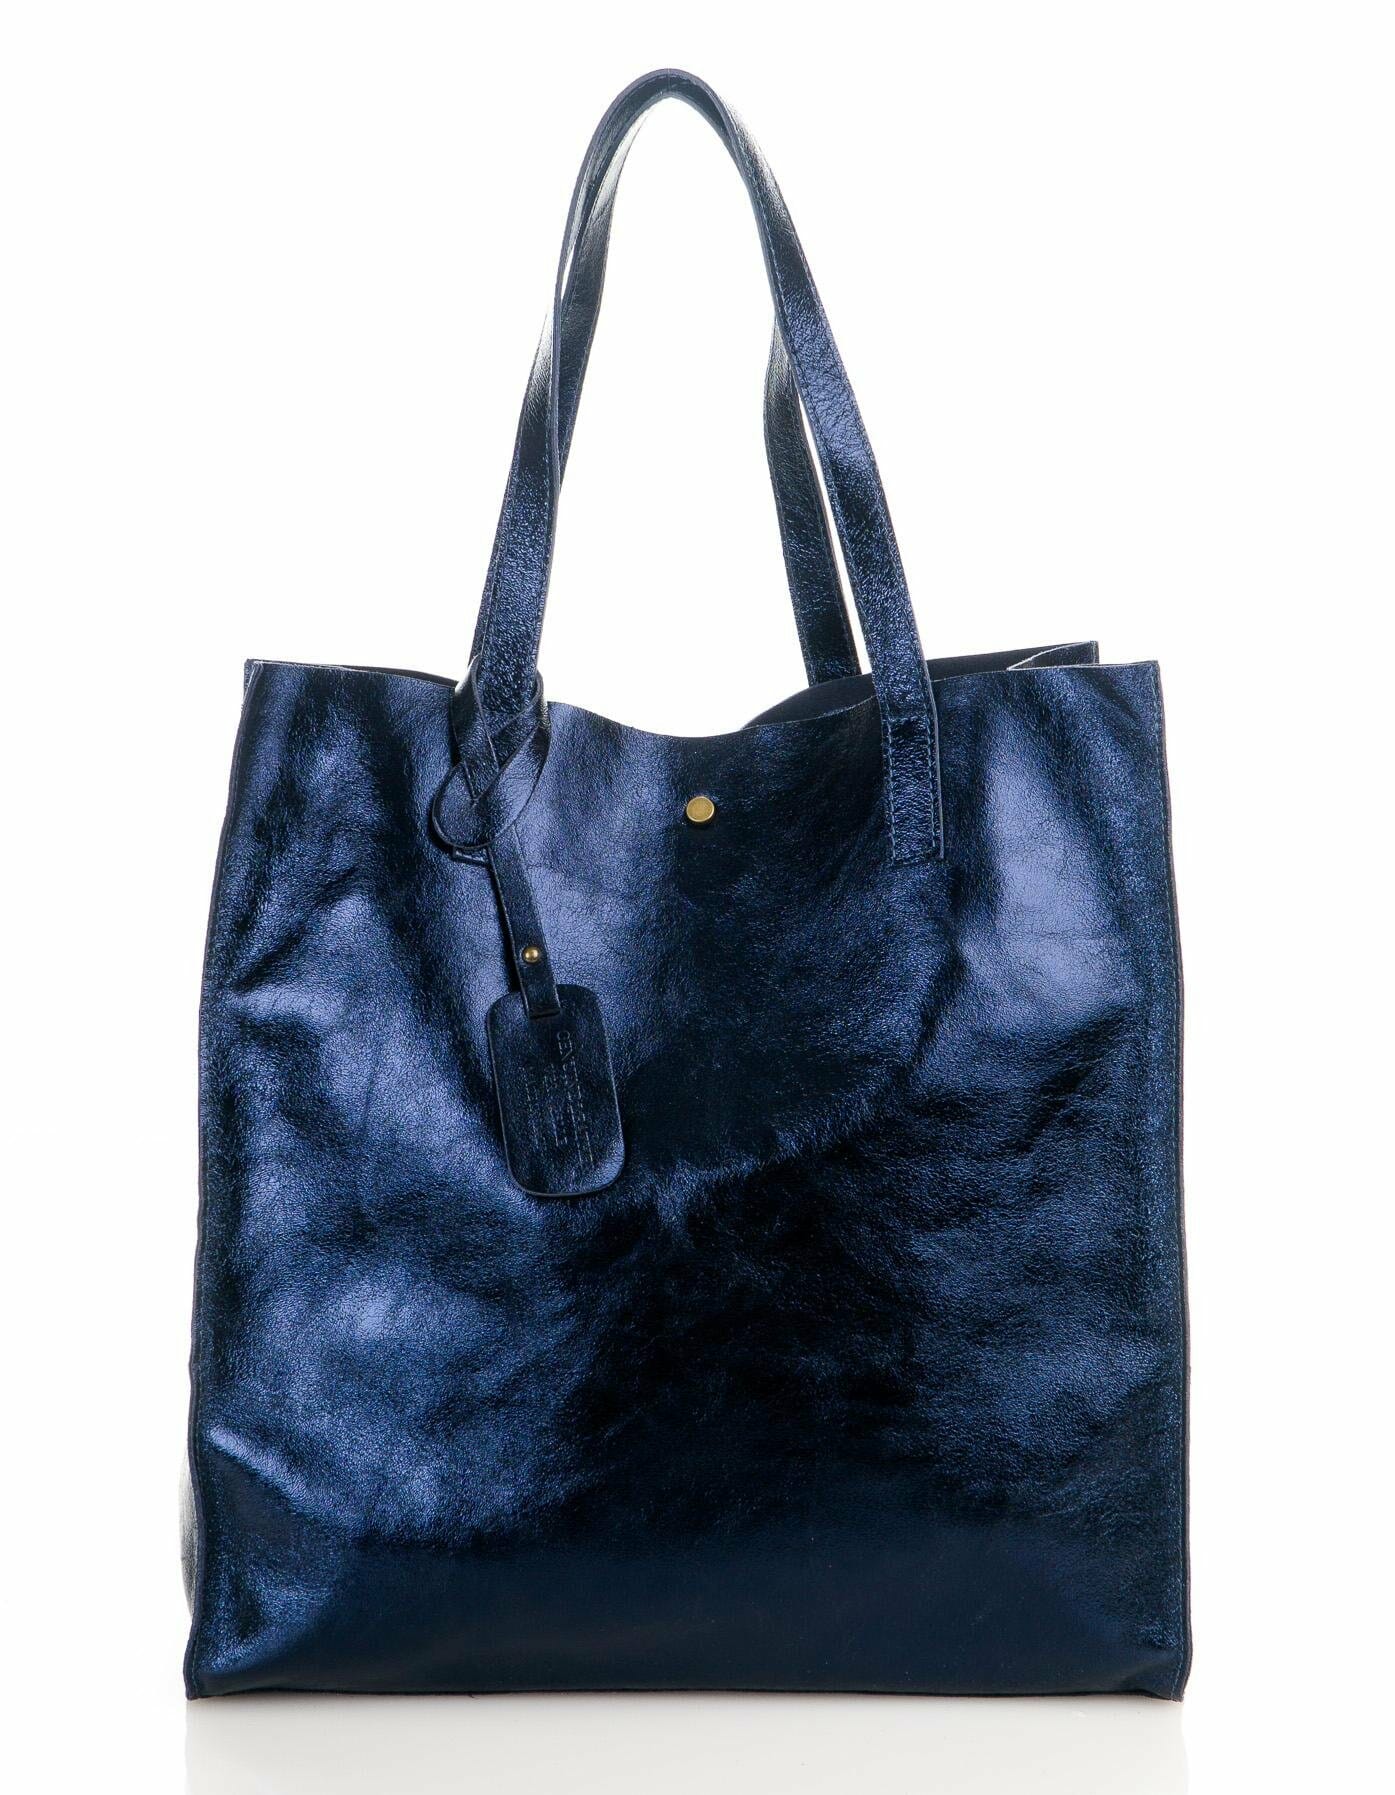 Emilia-2 Metallic genuine leather bag - BLUE